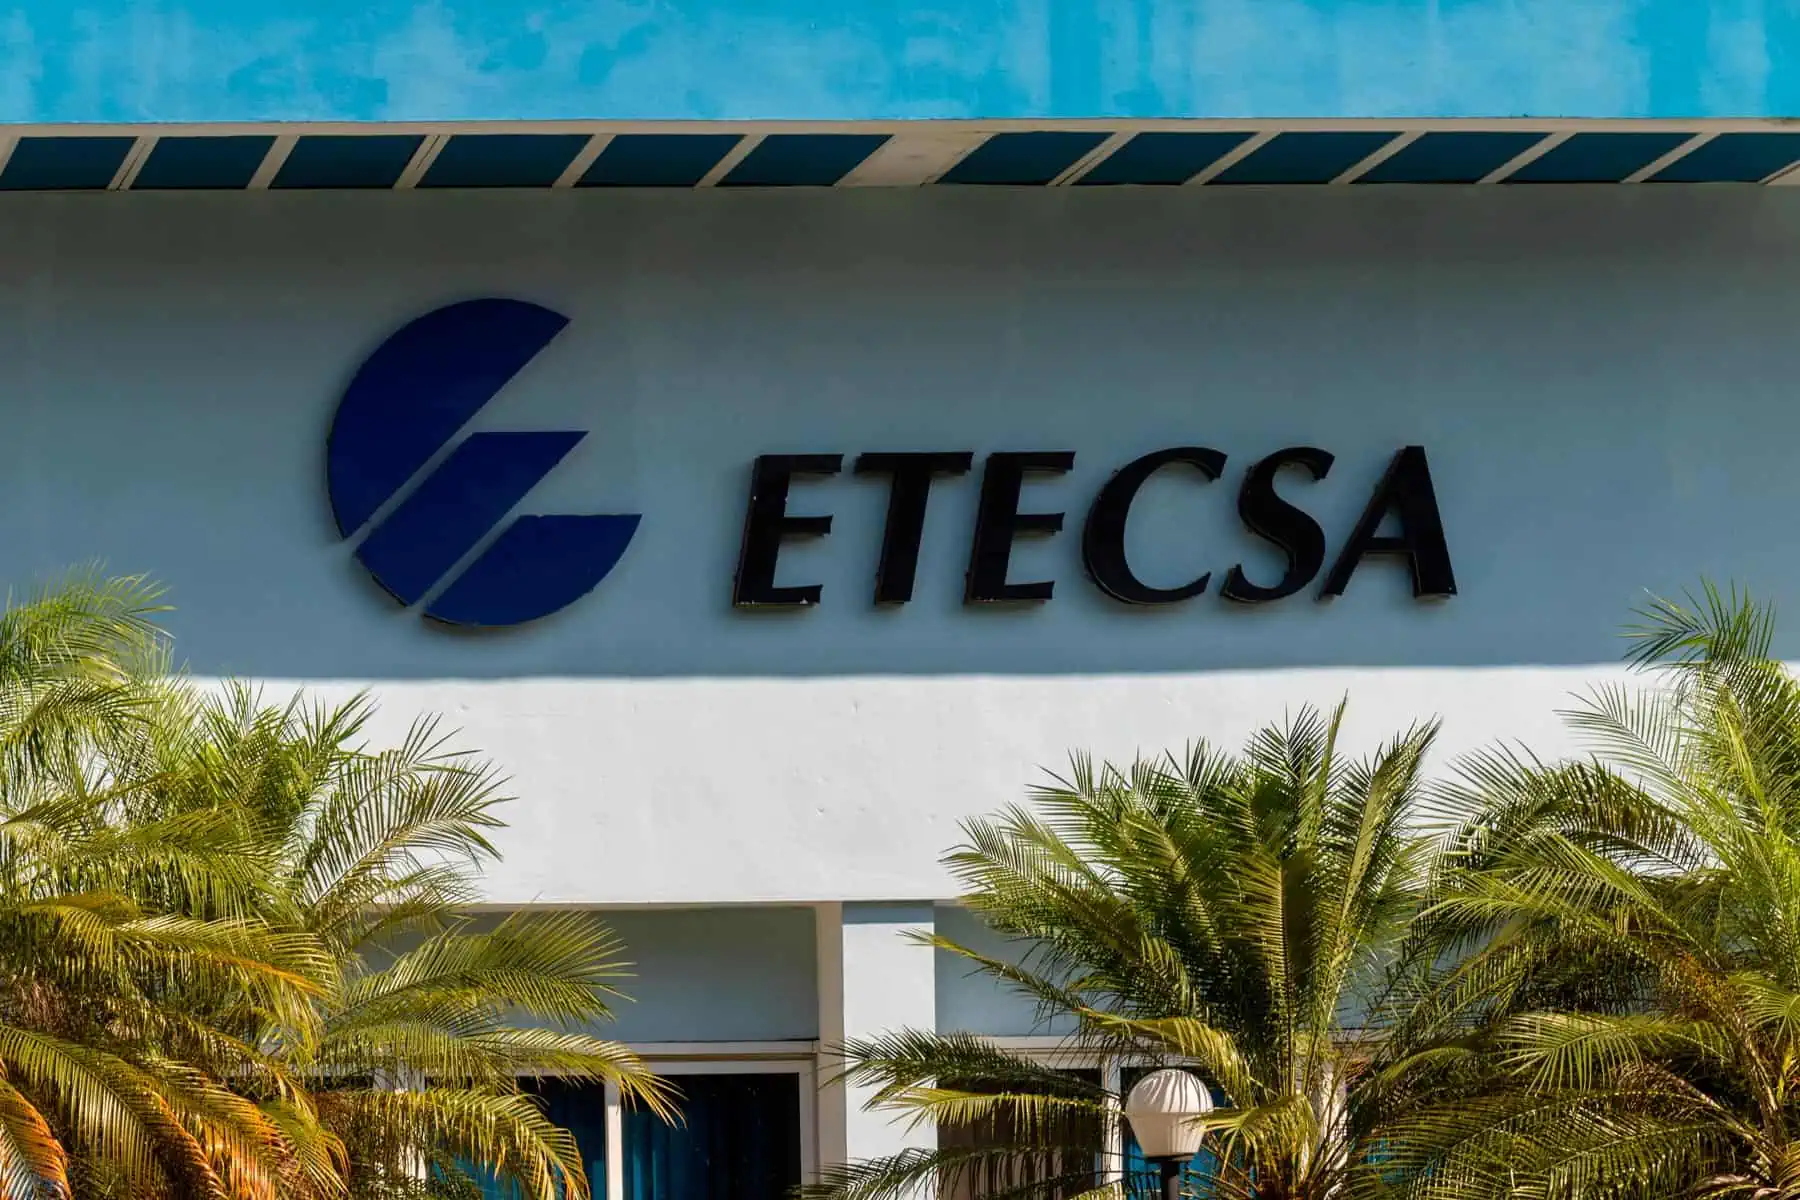 Ofrece ETECSA Curso de Habilitación de Ejecutivo A en Telemática en La Habana